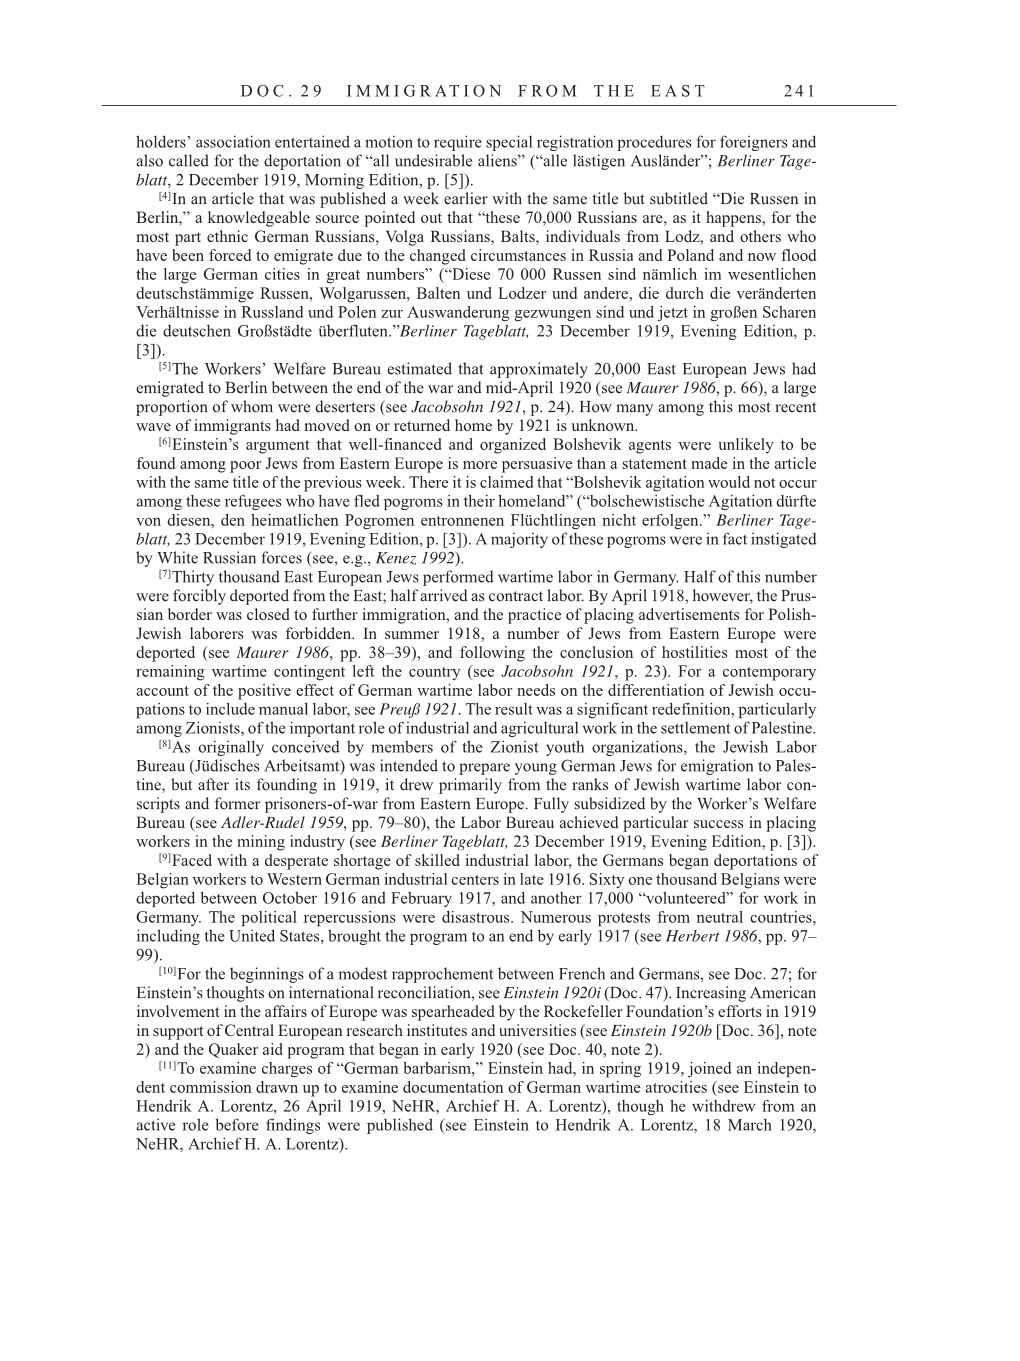 Volume 7: The Berlin Years: Writings, 1918-1921 page 241